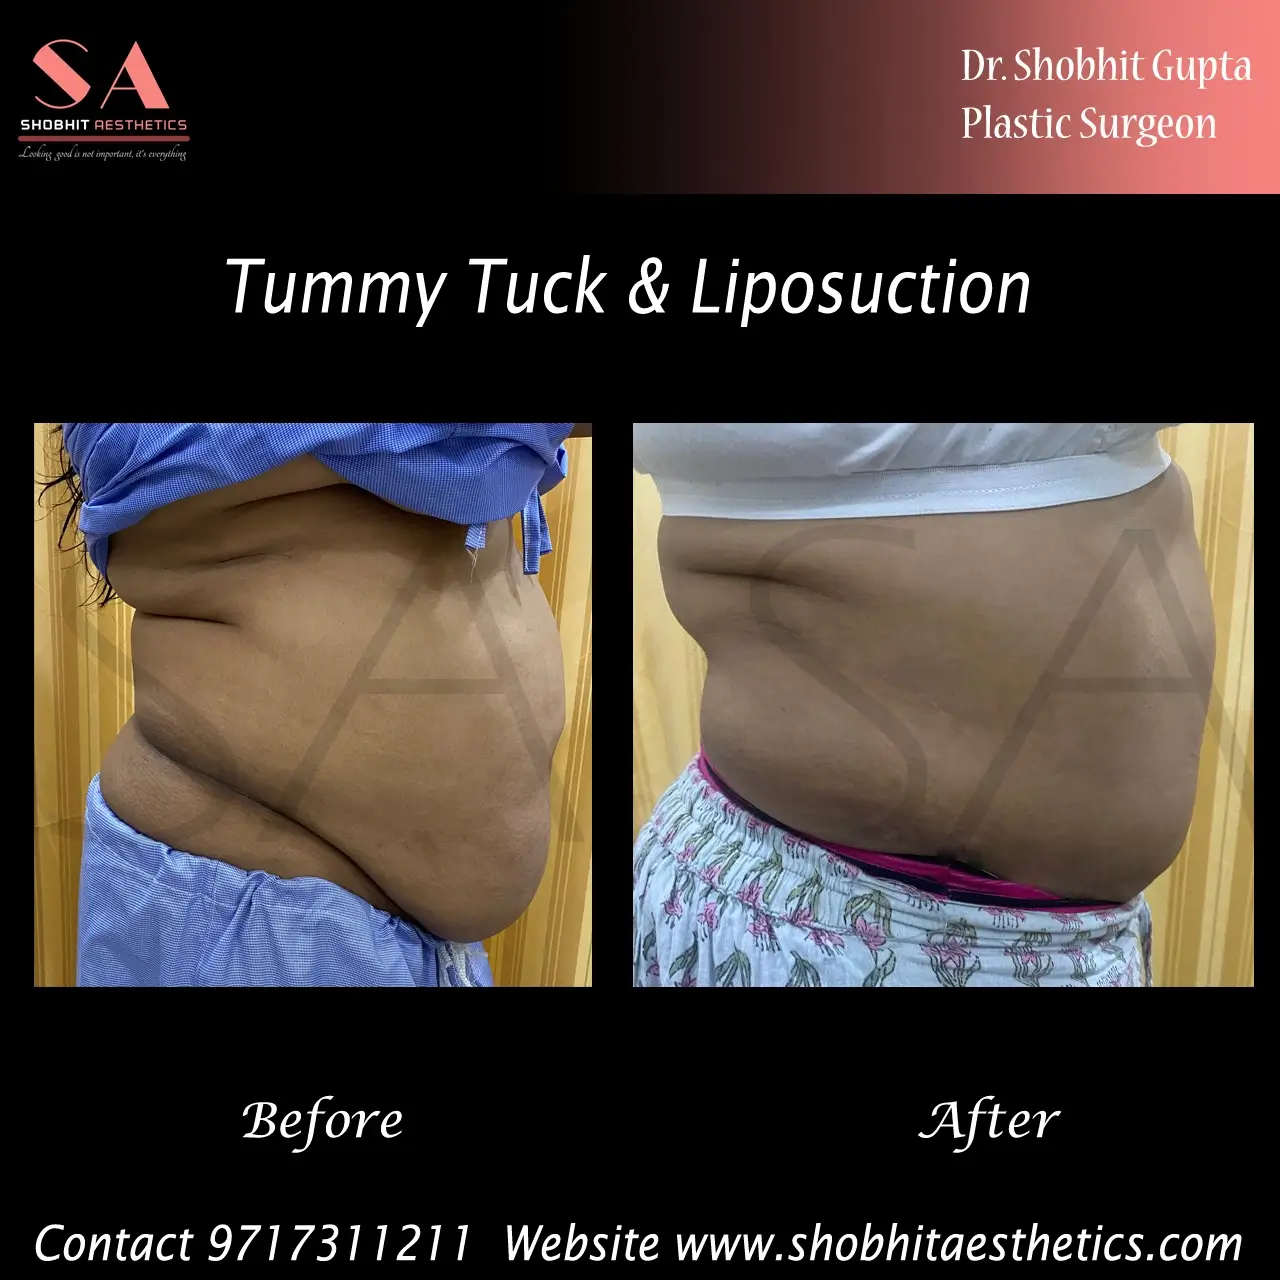 Tummy Tuck in Ahmedabad